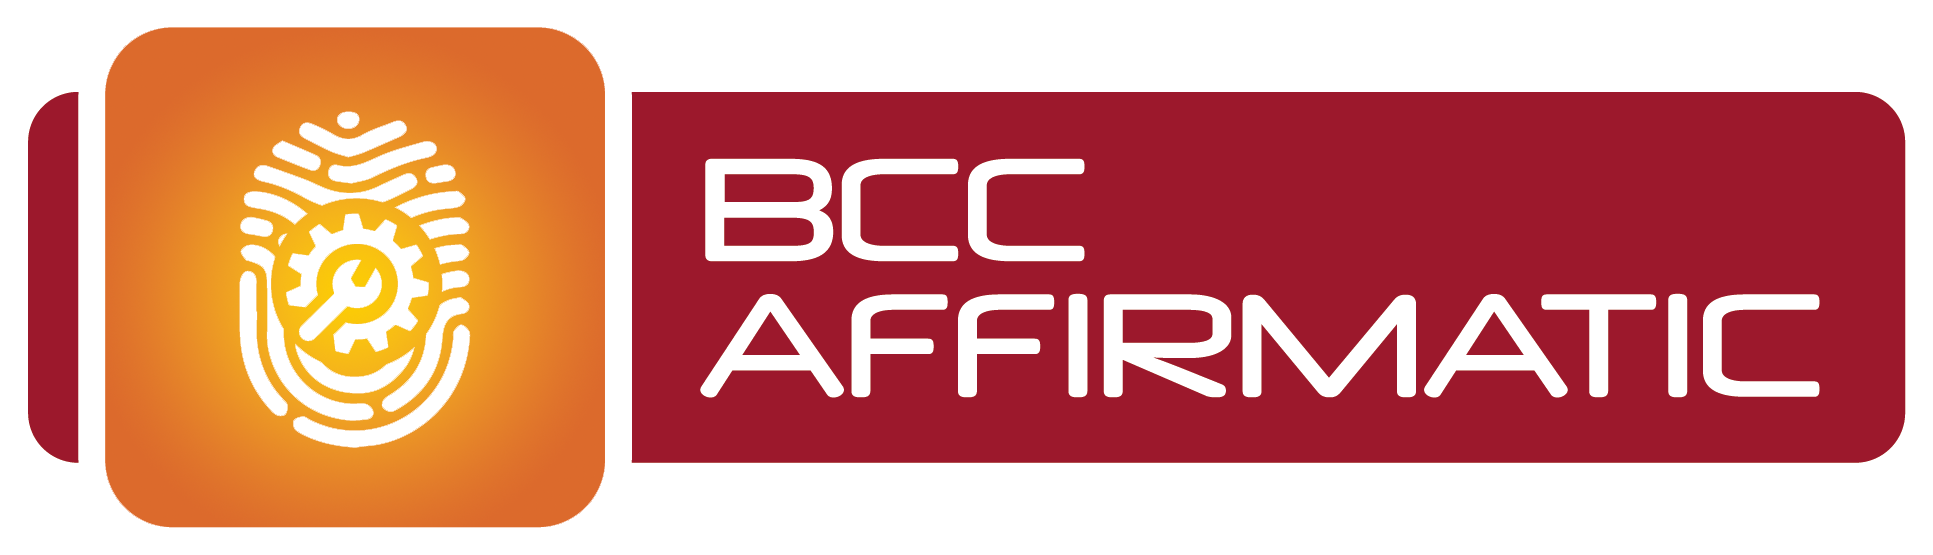 BCC Affirmatic product logo